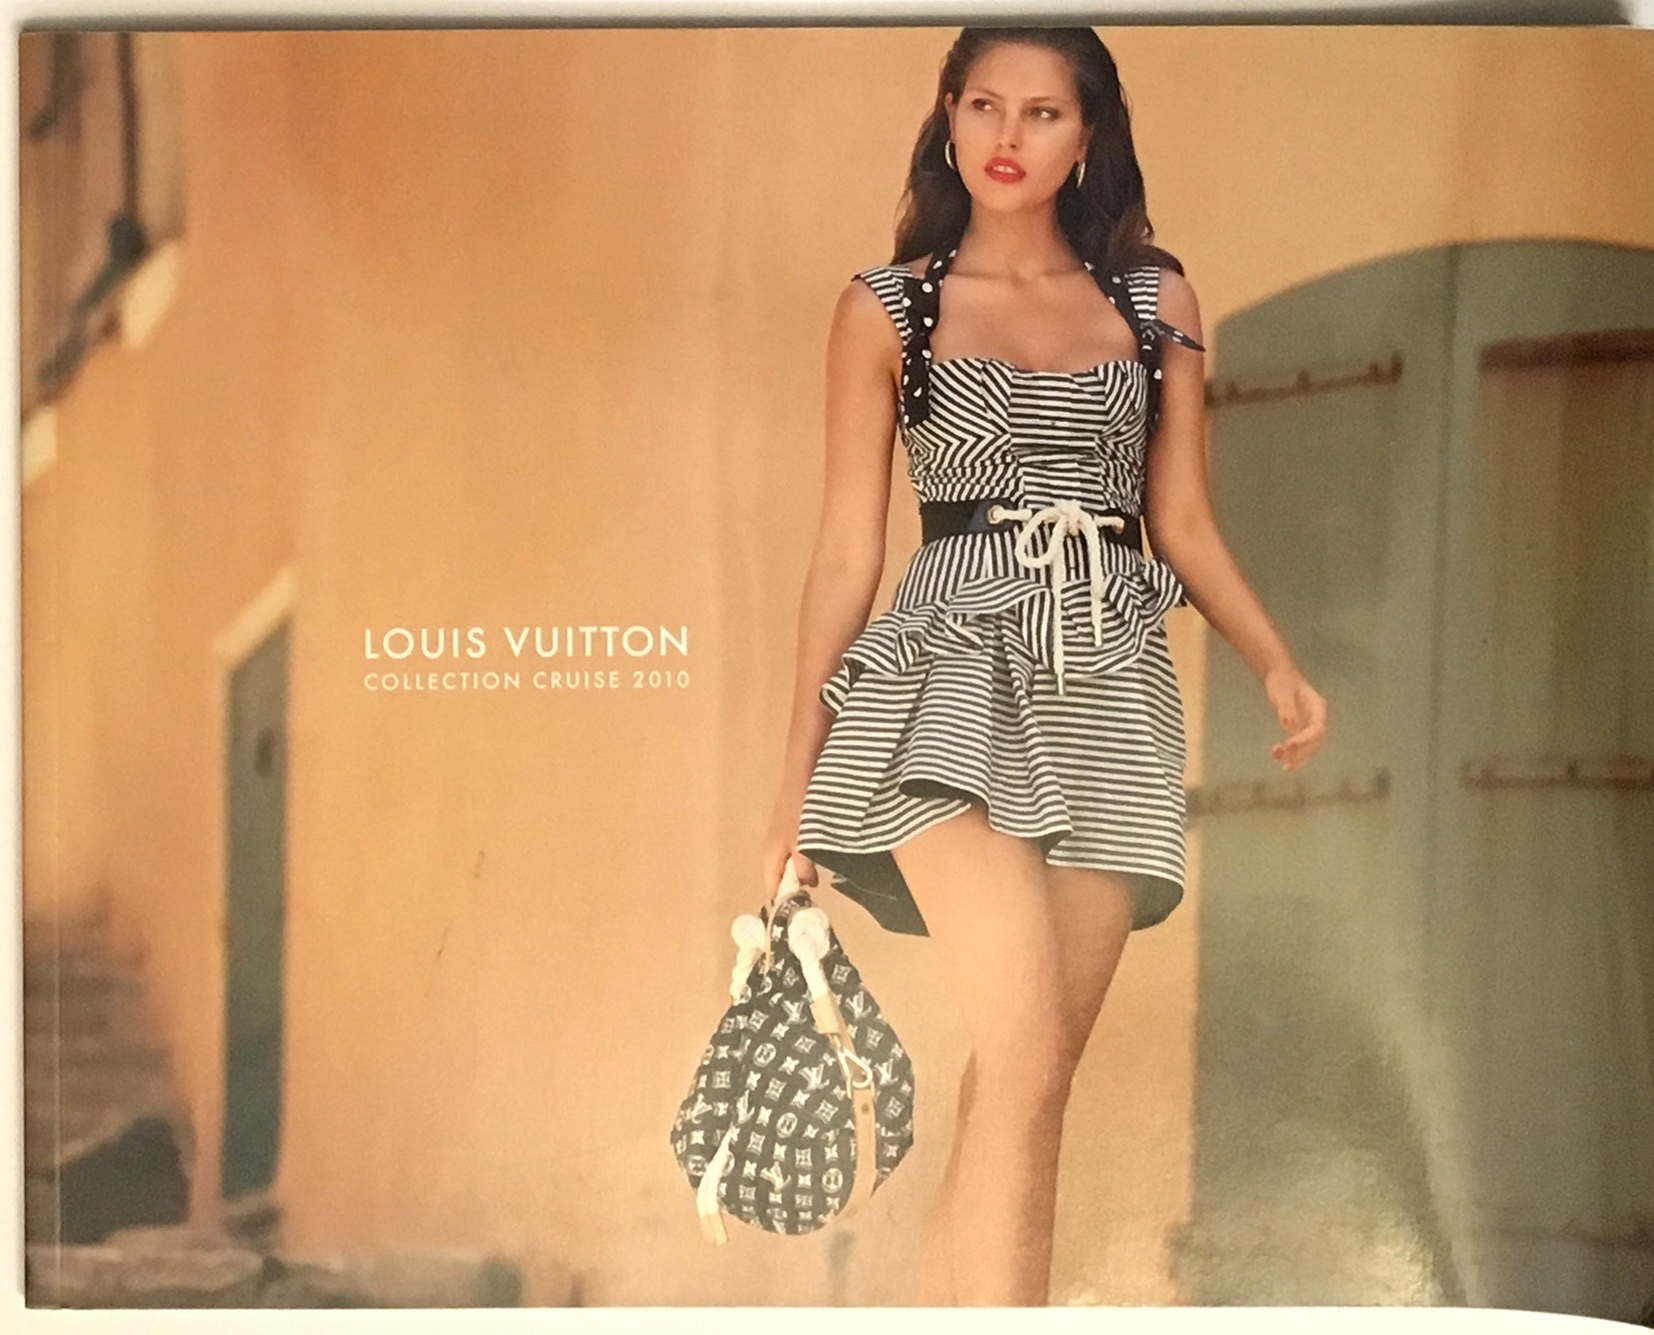 Louis Vuitton Fashion Catalog Cruise Men Women RTW Cover Croisiere Paris Marc Jacobs November Vacation 2010